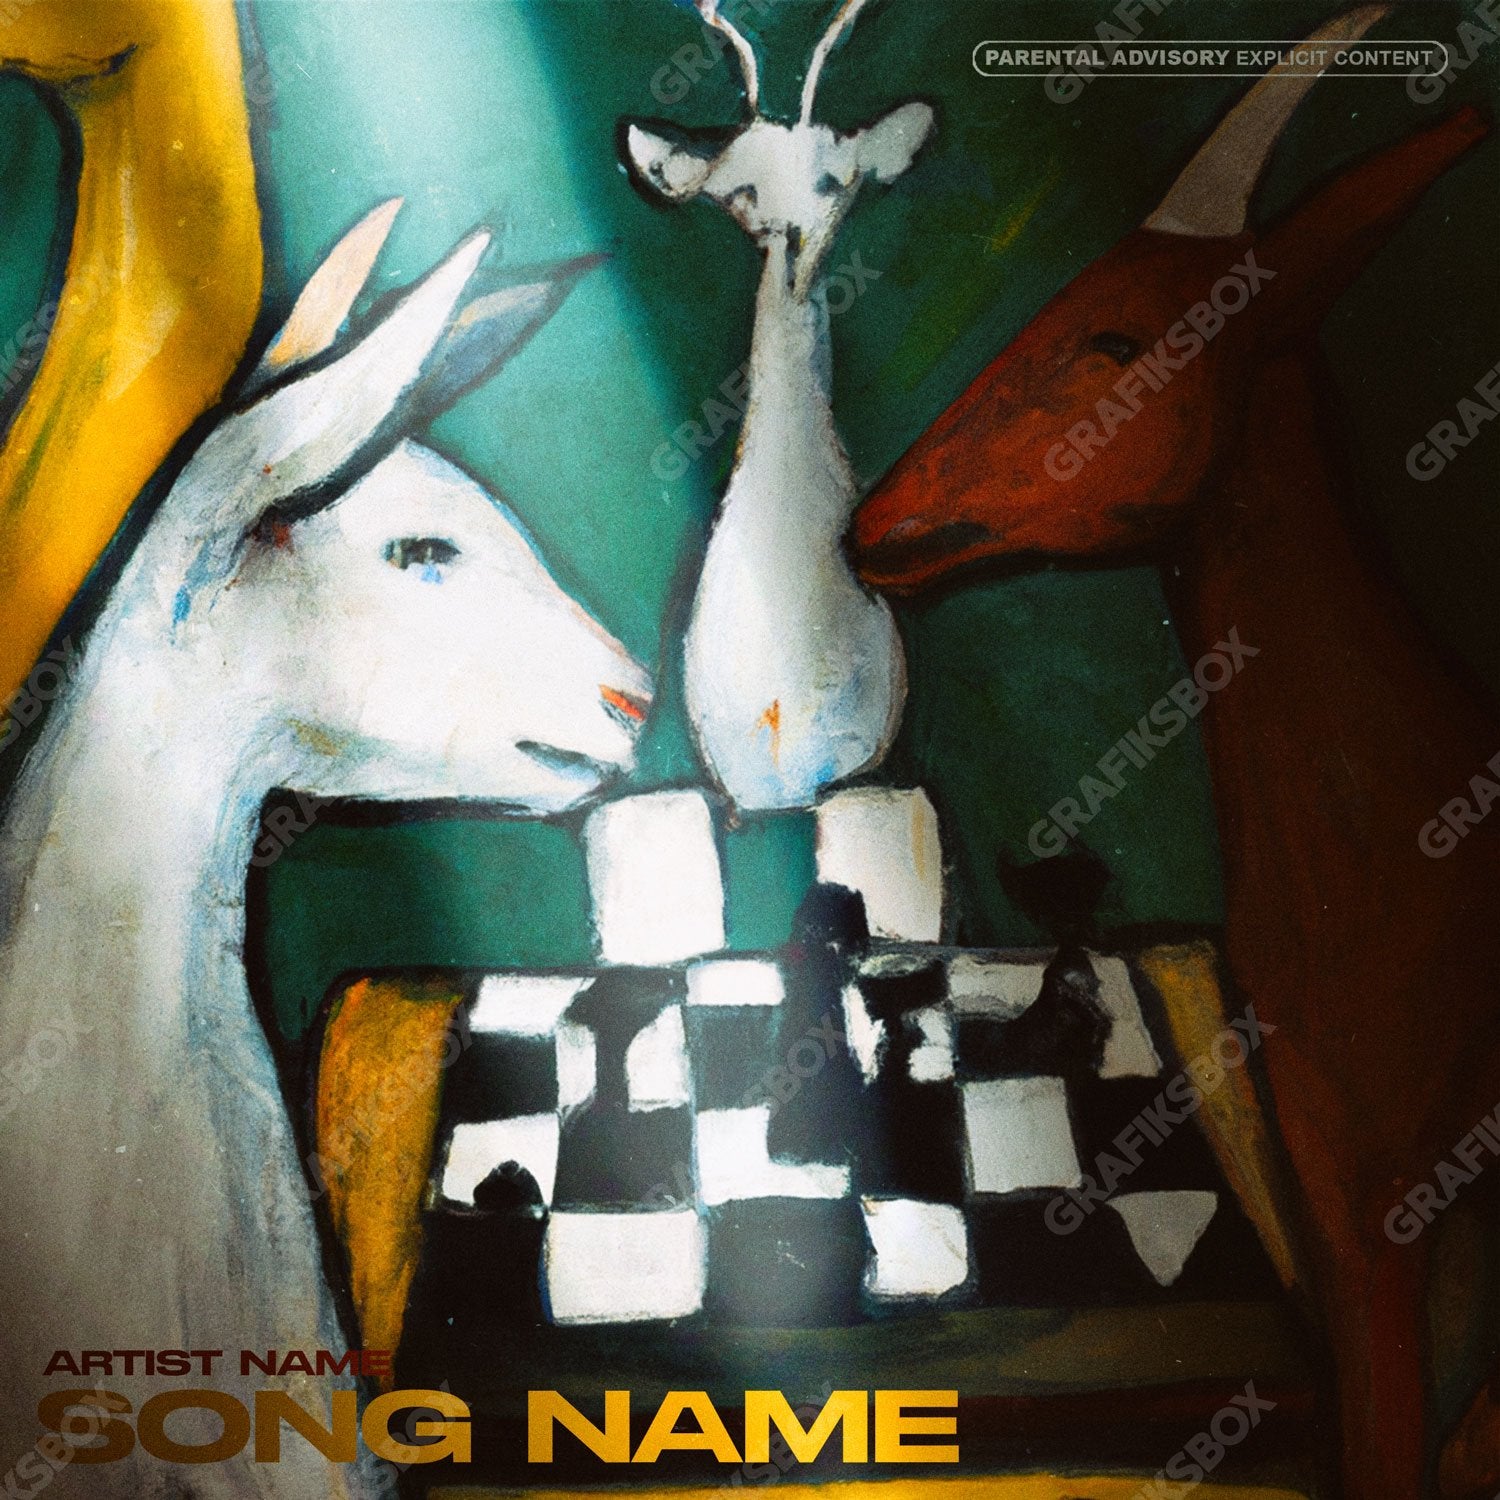 Chess premade cover art